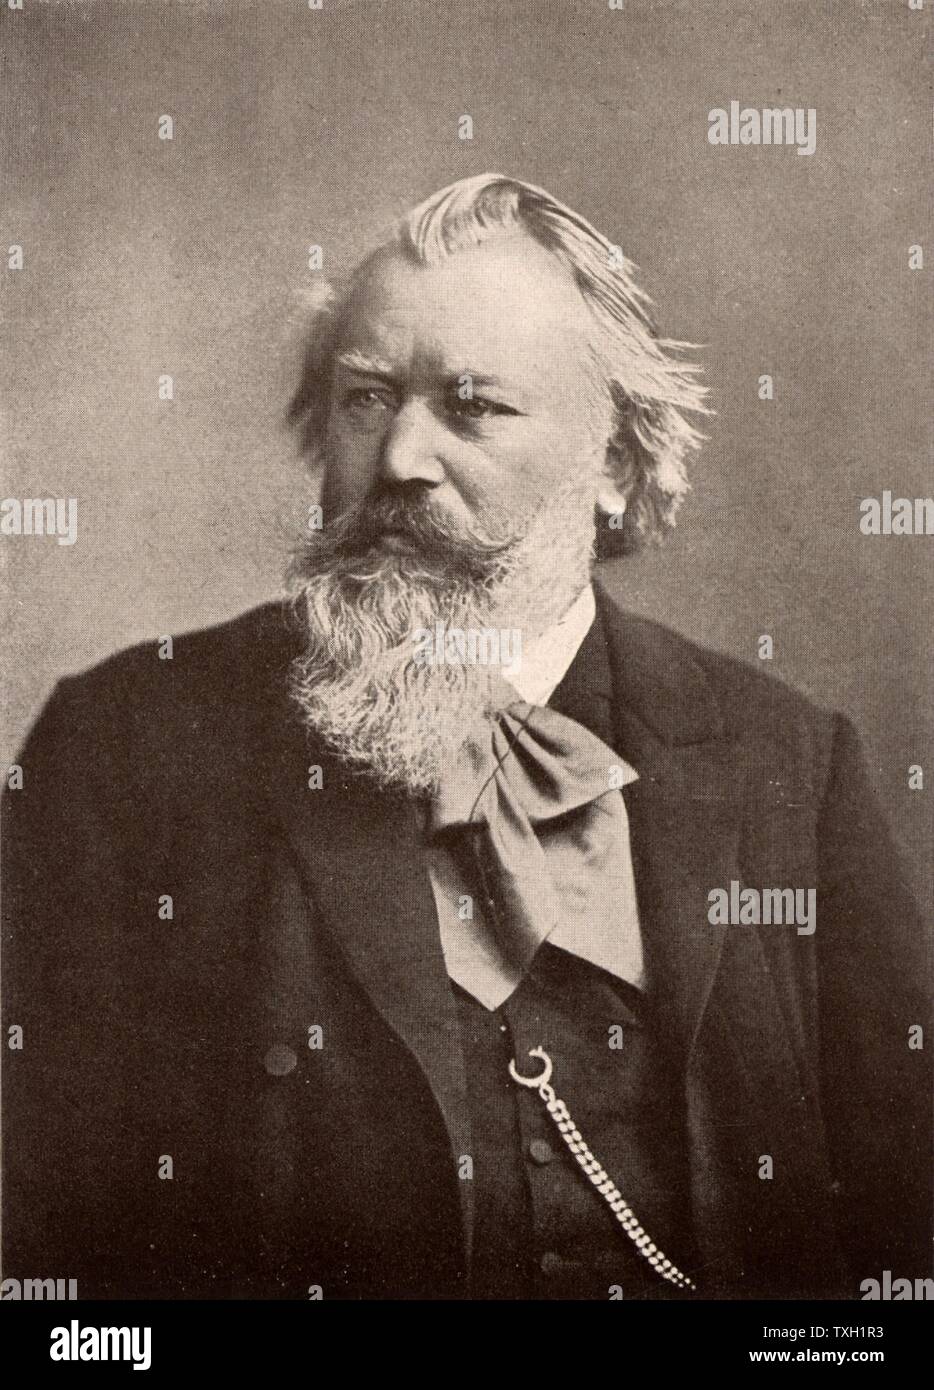 Johannes Brahms (1833-1897) German composer. After a photograph. Halftone. Stock Photo